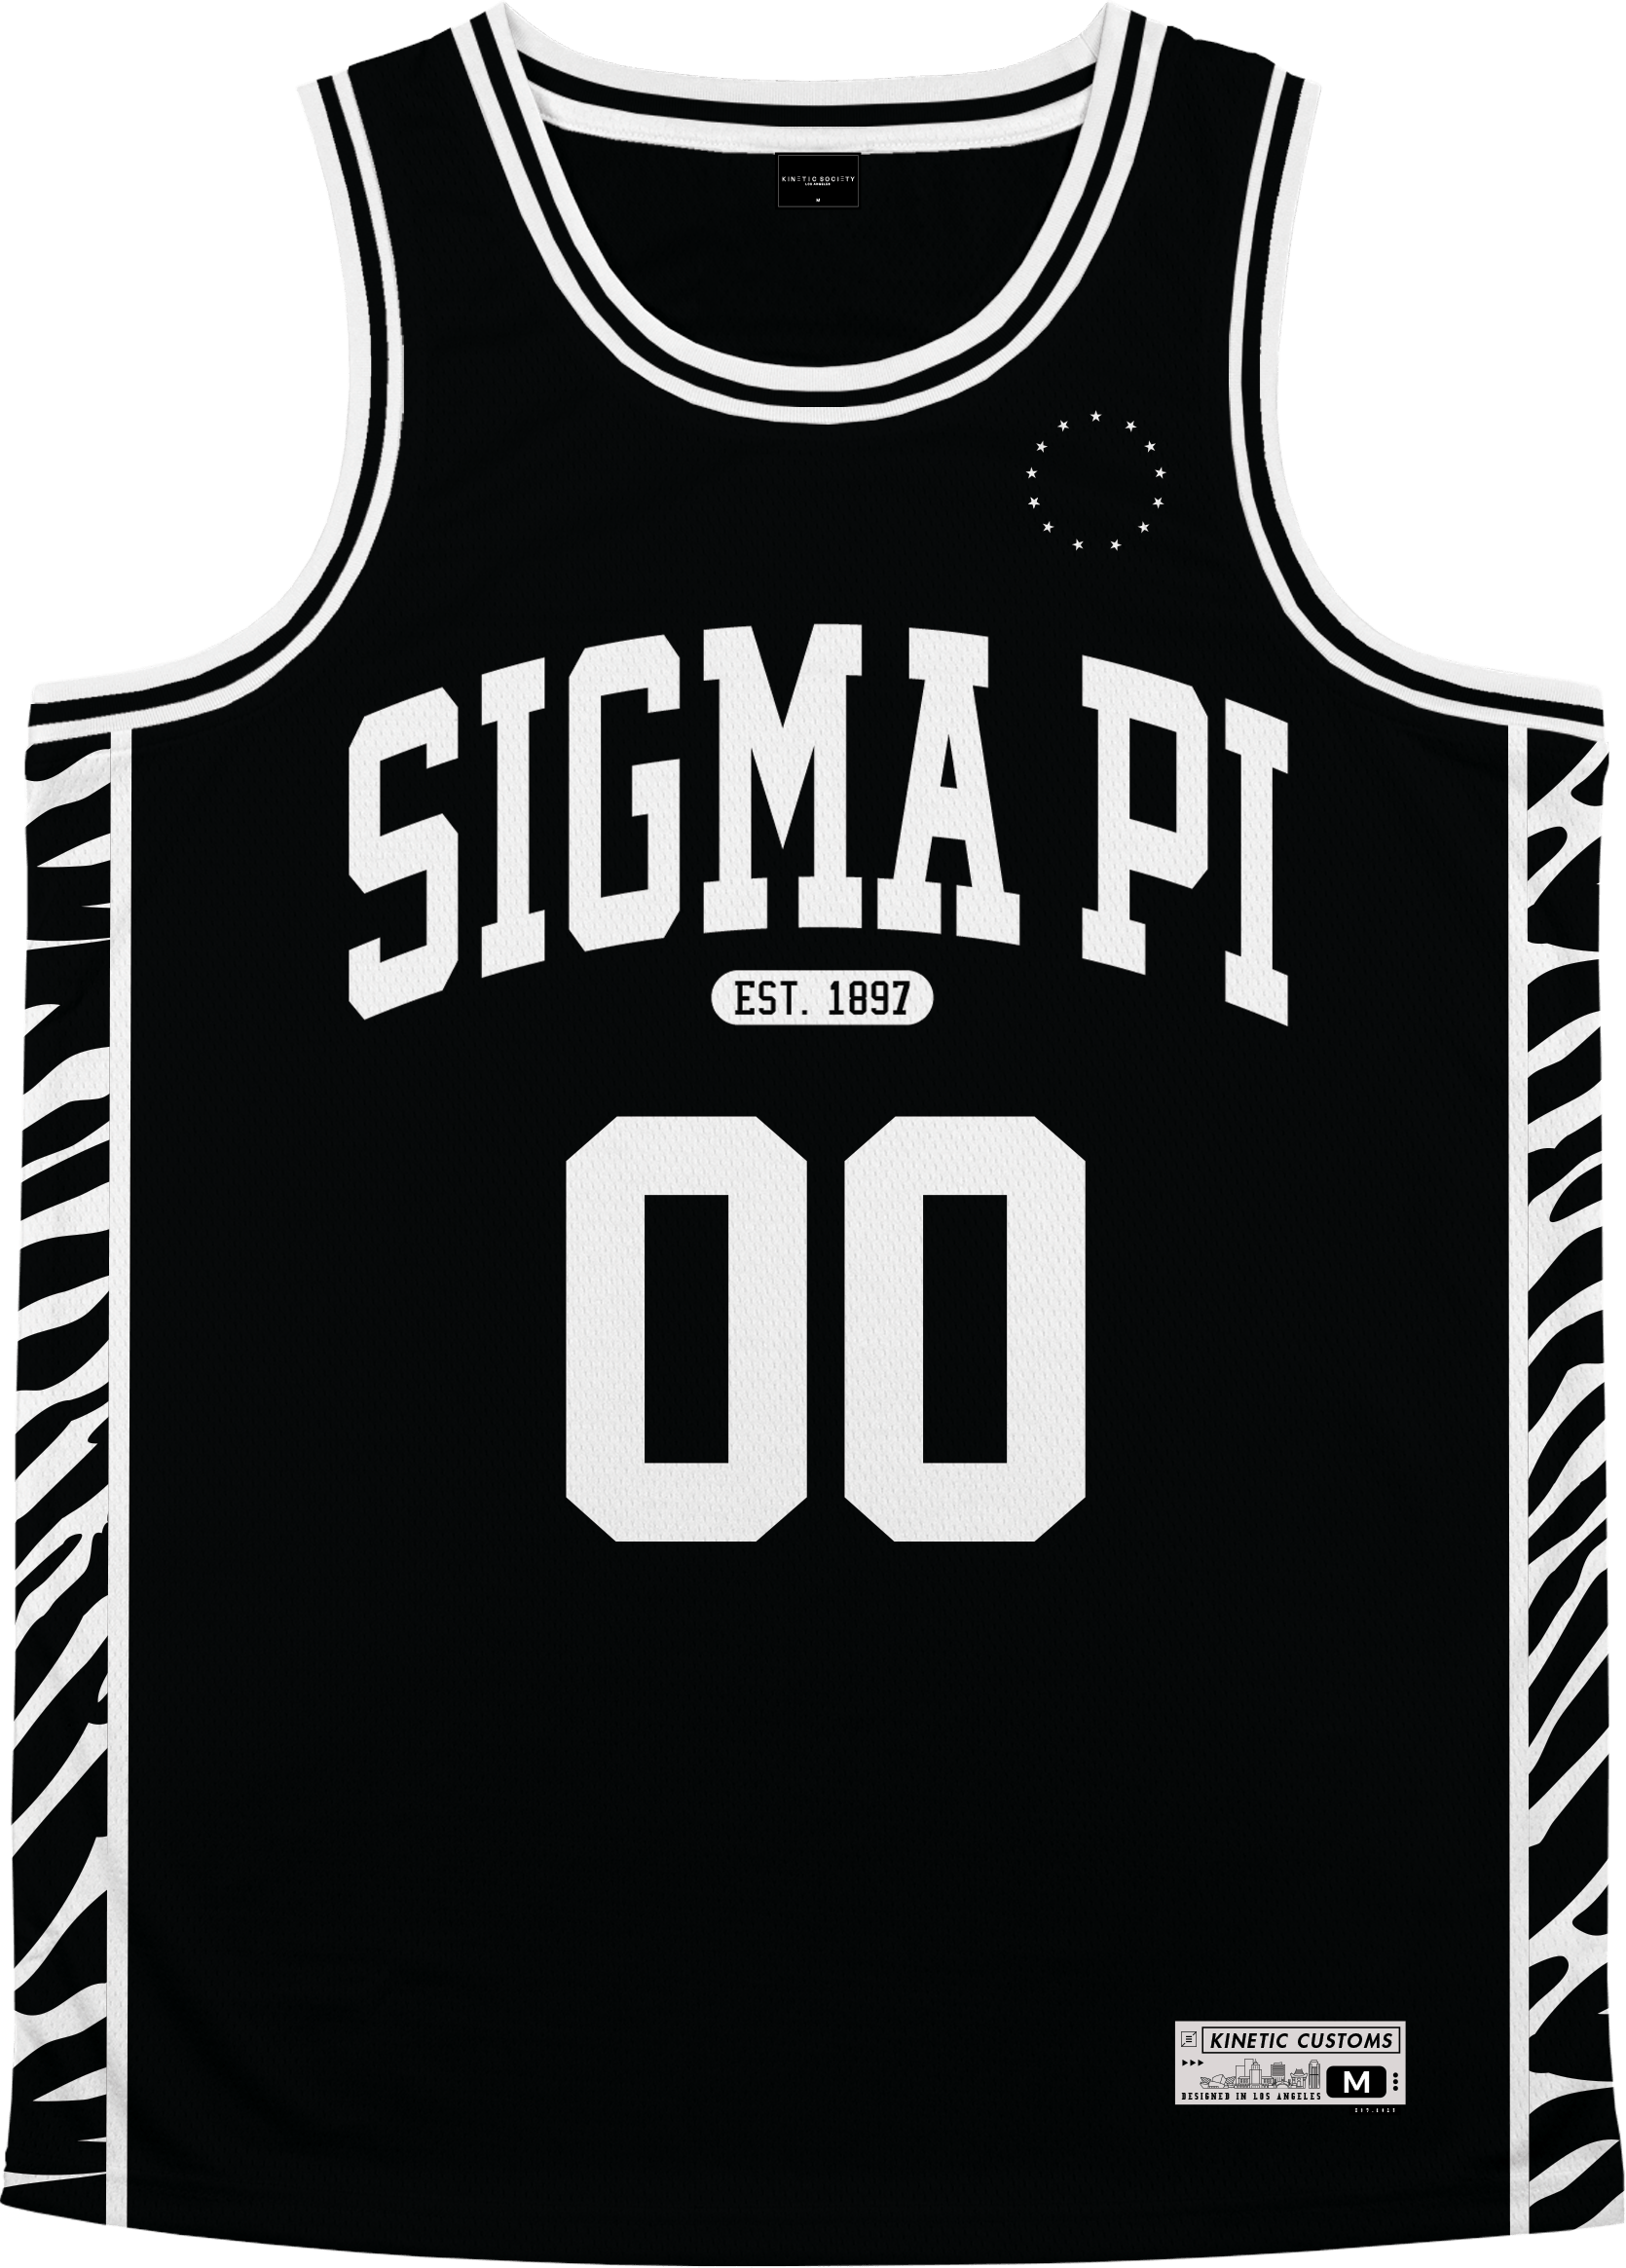 Sigma Pi - Zebra Flex Basketball Jersey Premium Basketball Kinetic Society LLC 